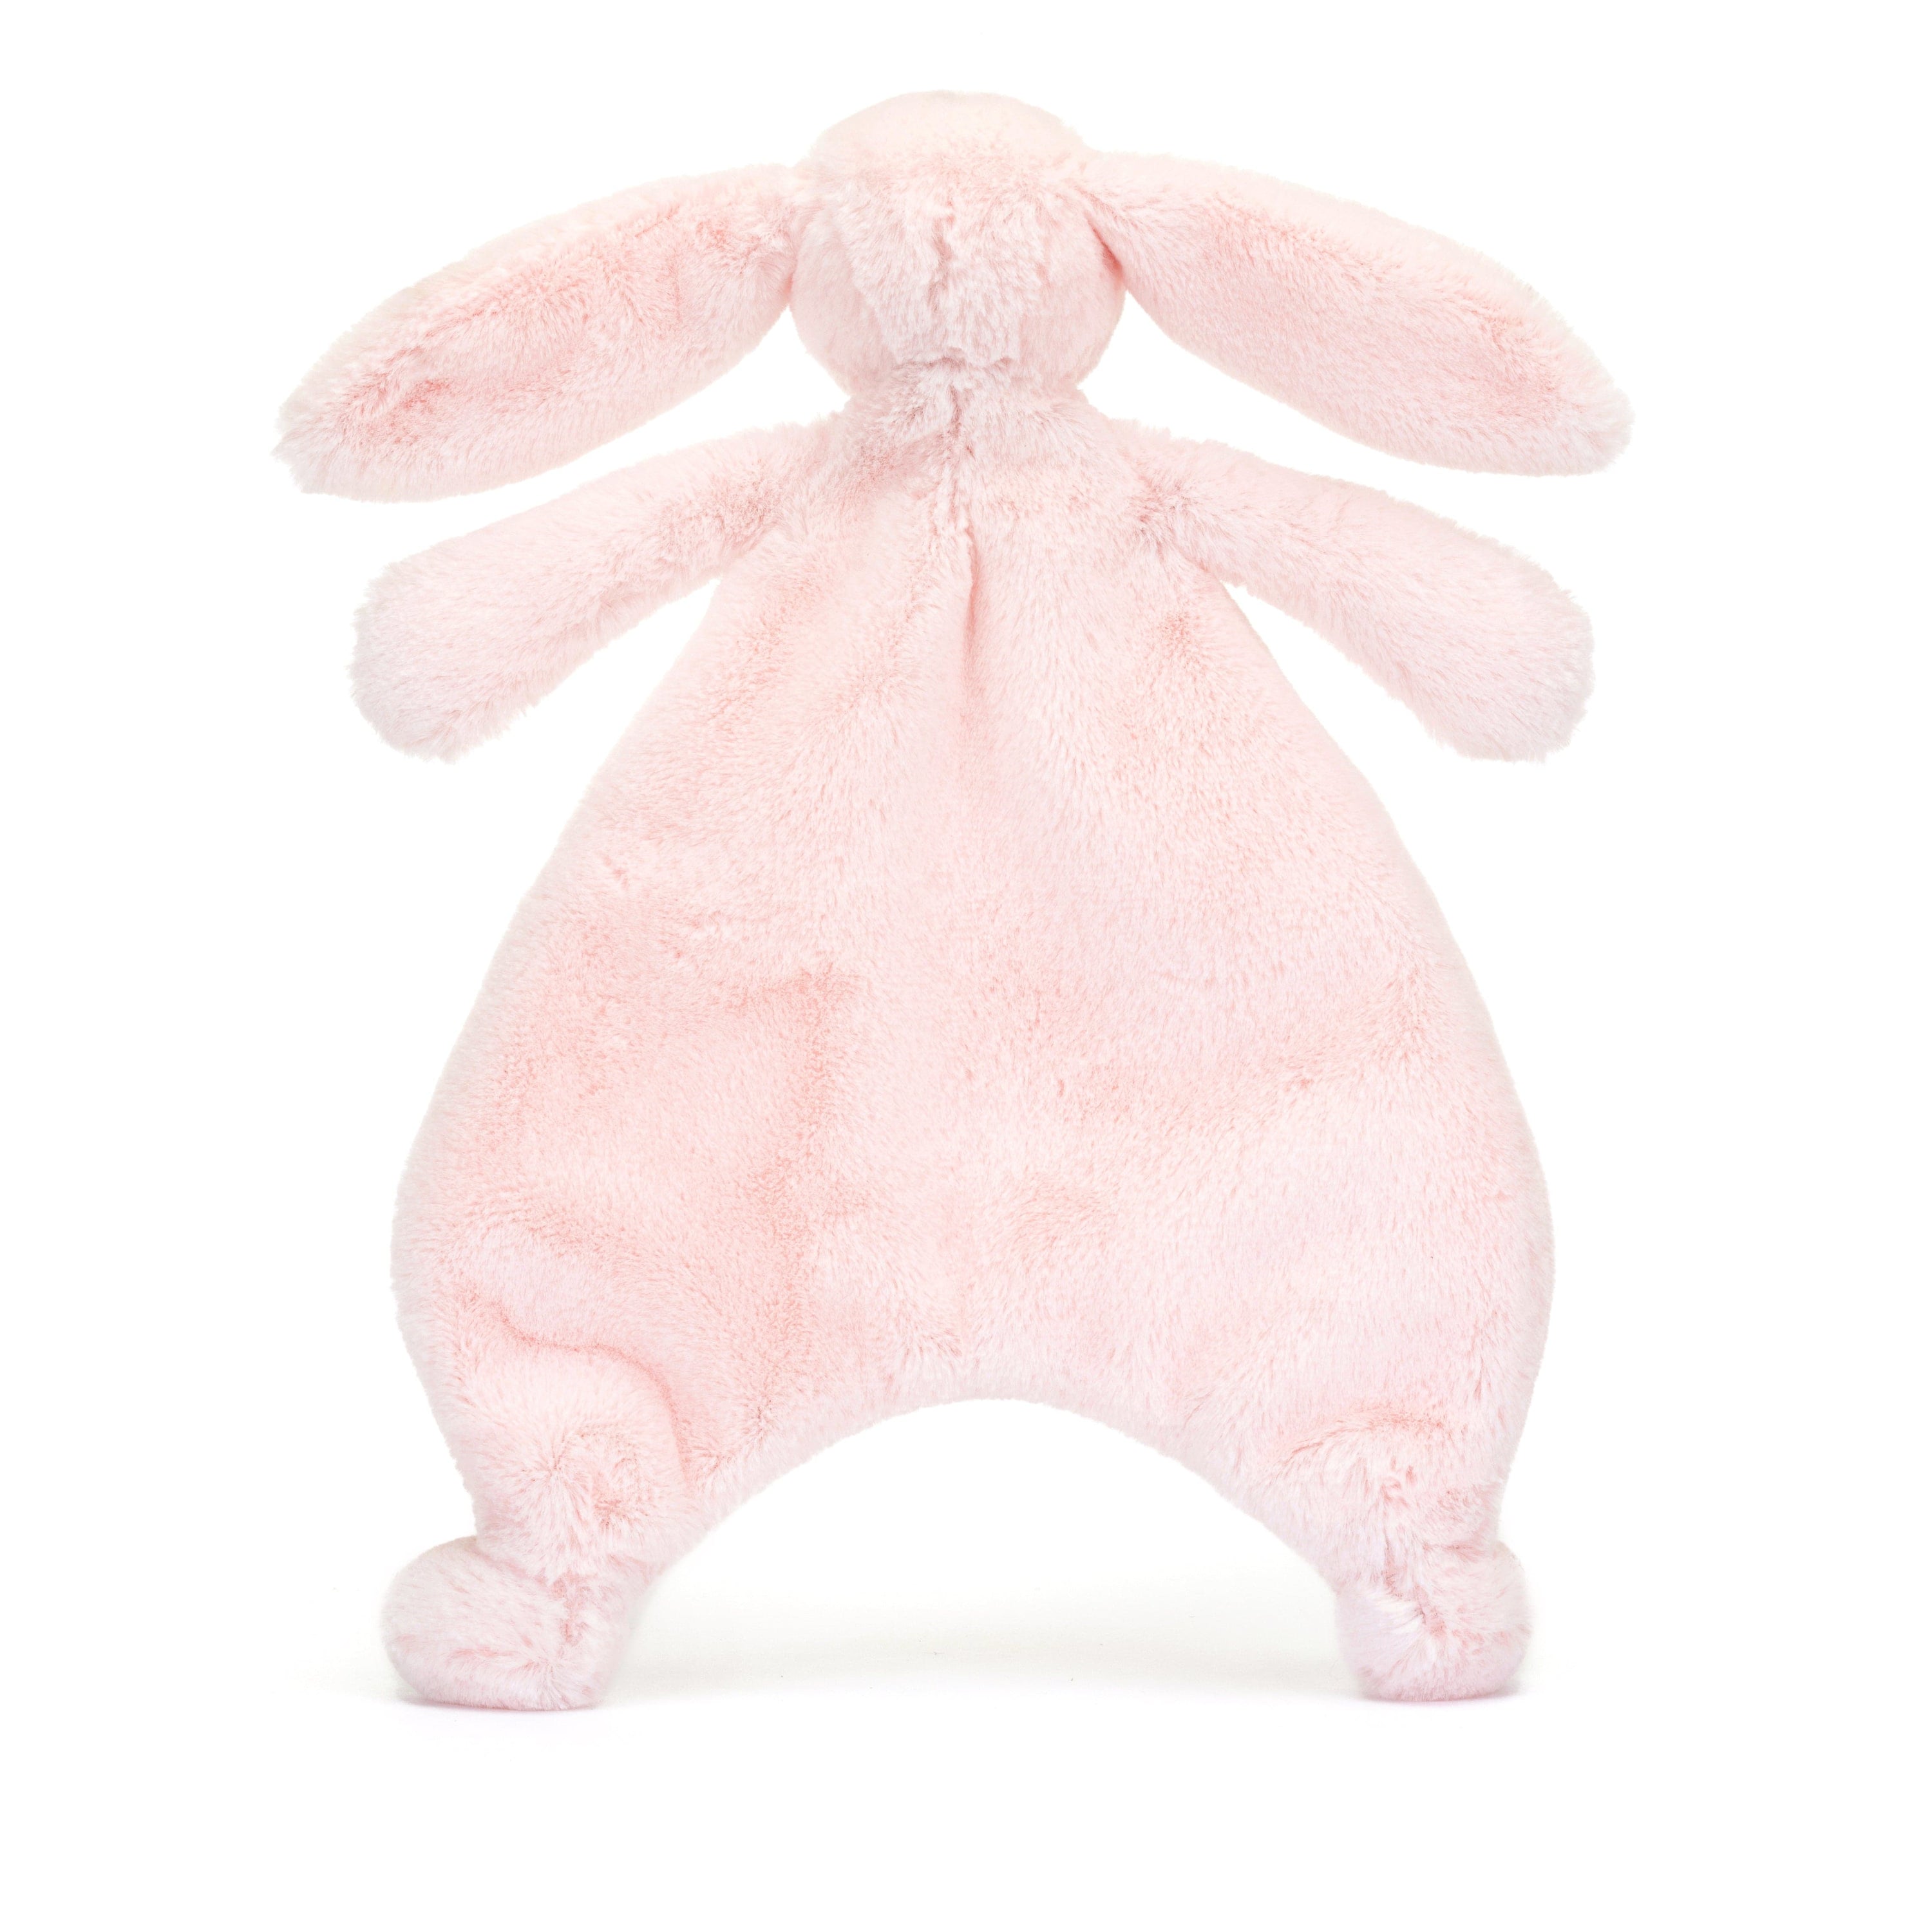 Bashful Pink Bunny Comforter JellyCat Lil Tulips